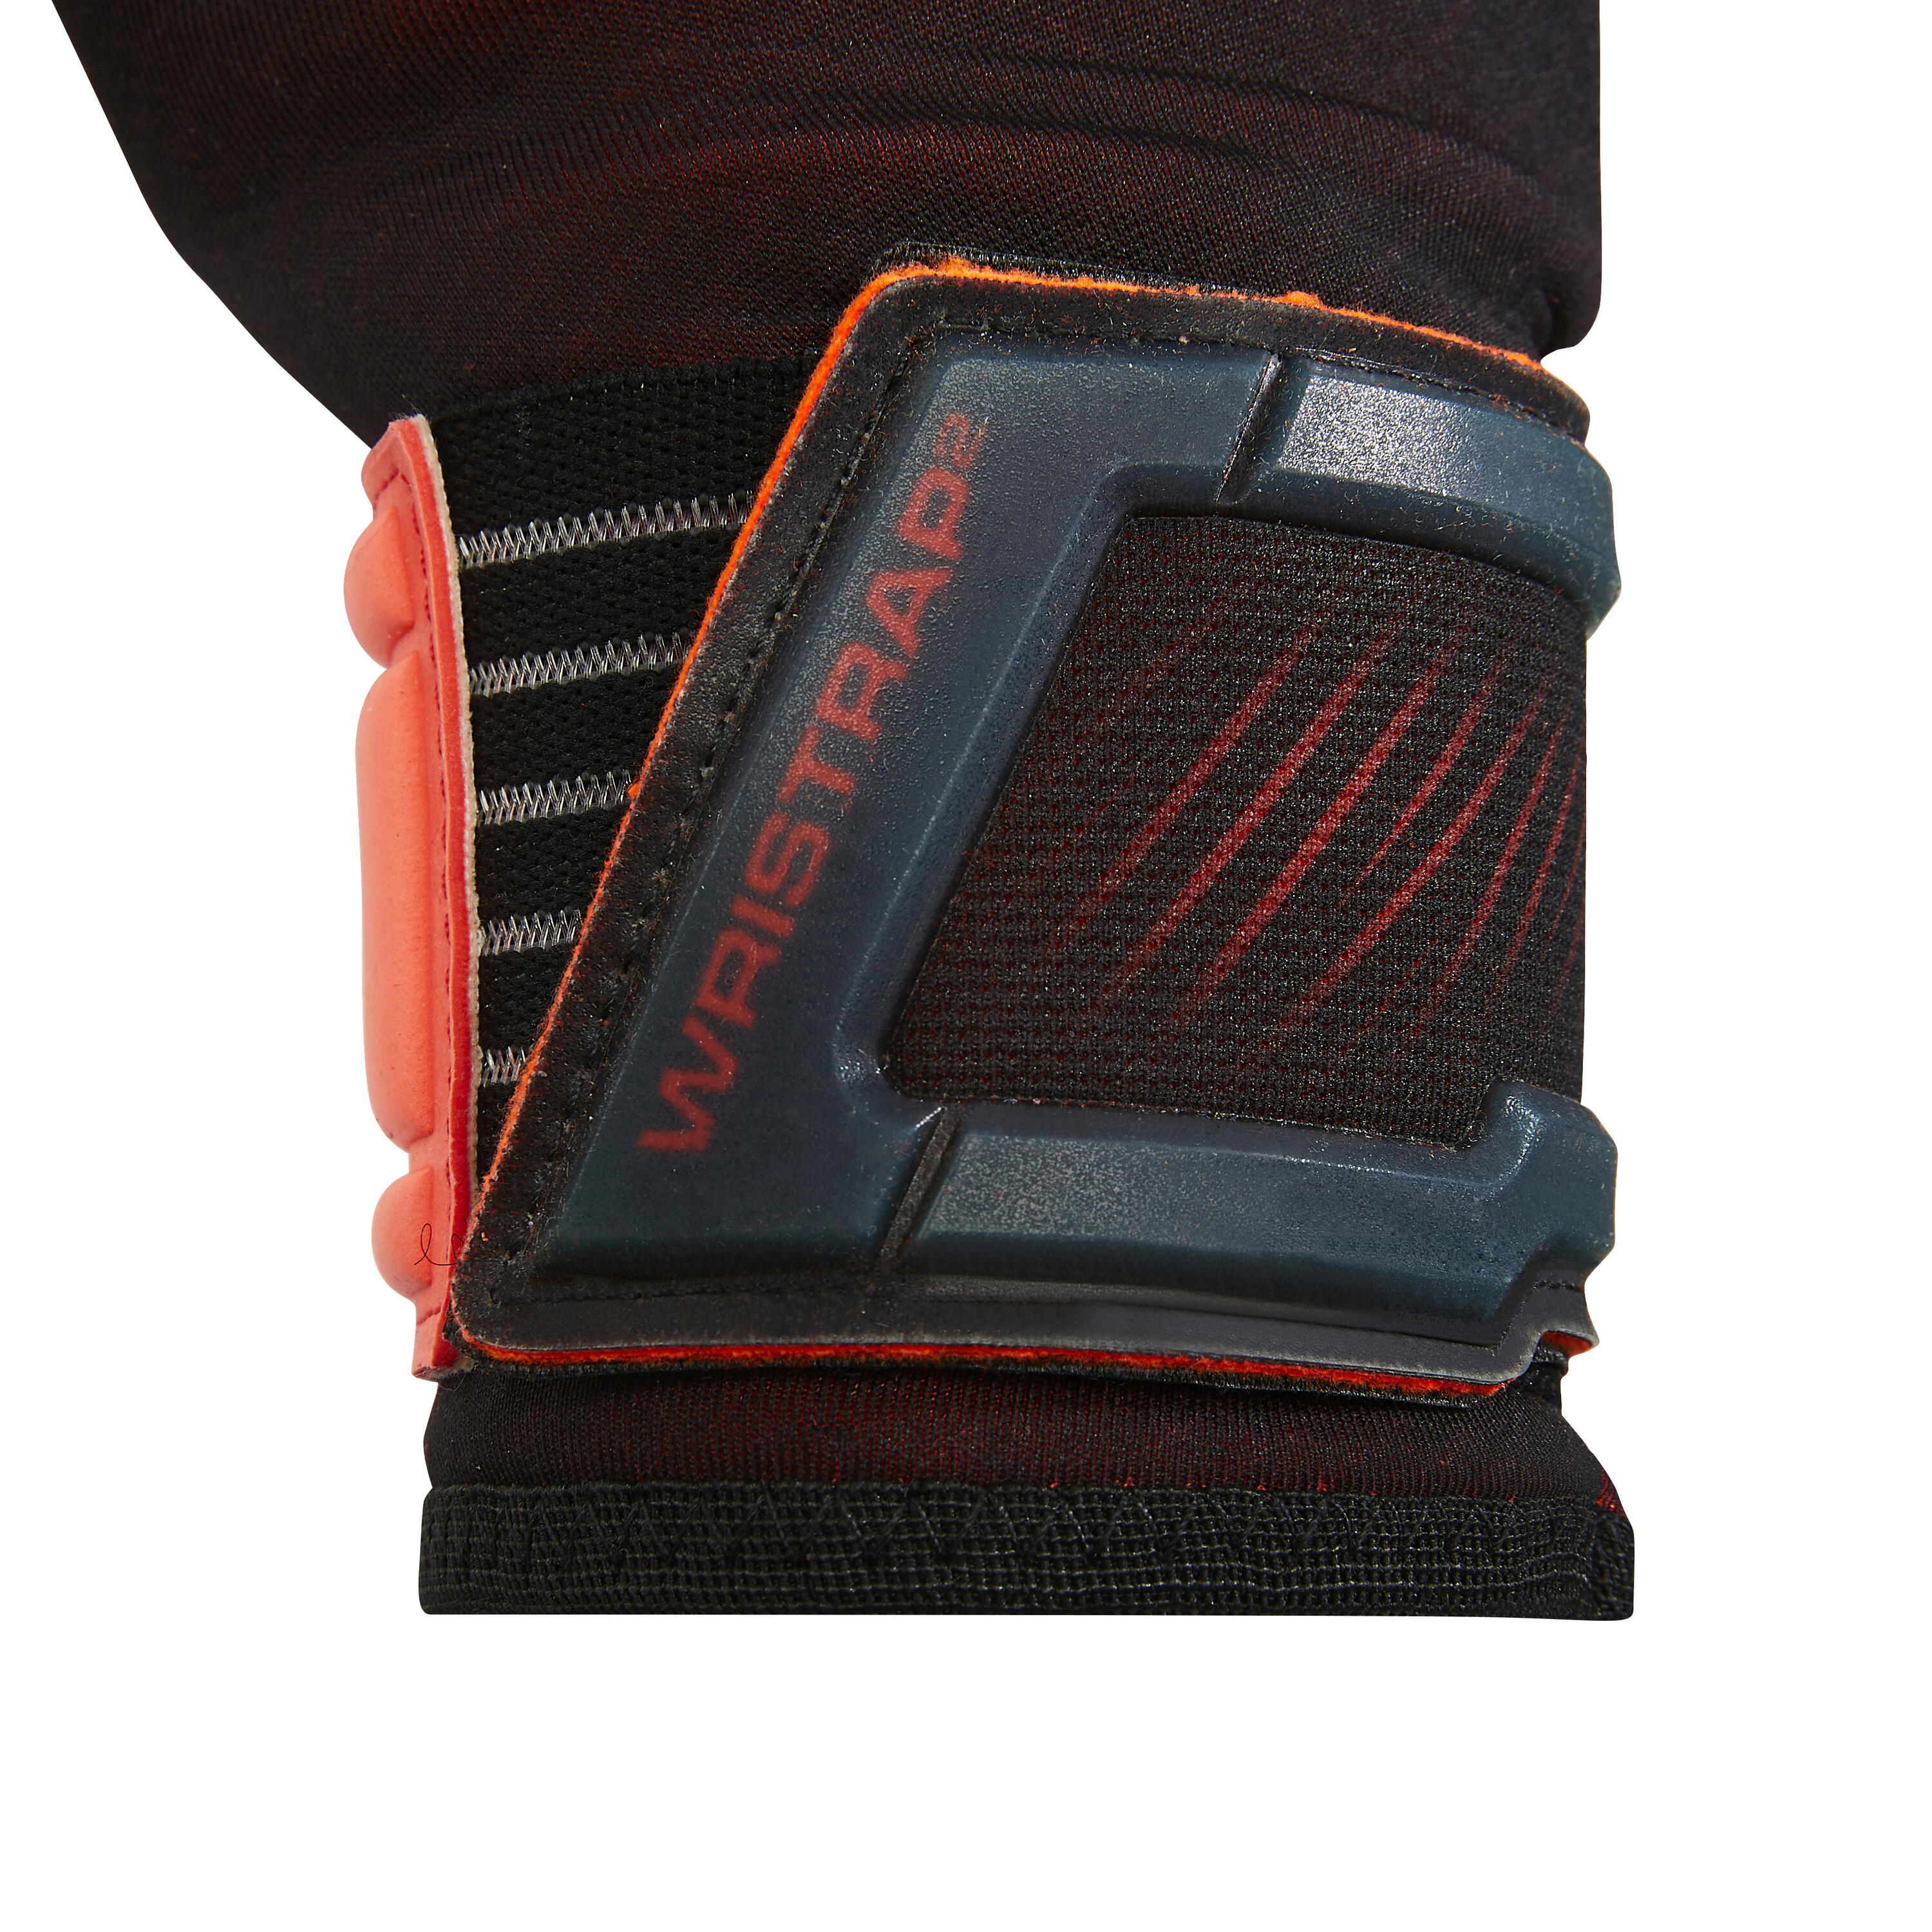 Adult Football Rollfinger Seam Goalkeeper Gloves F900 - Black/Red 3/4